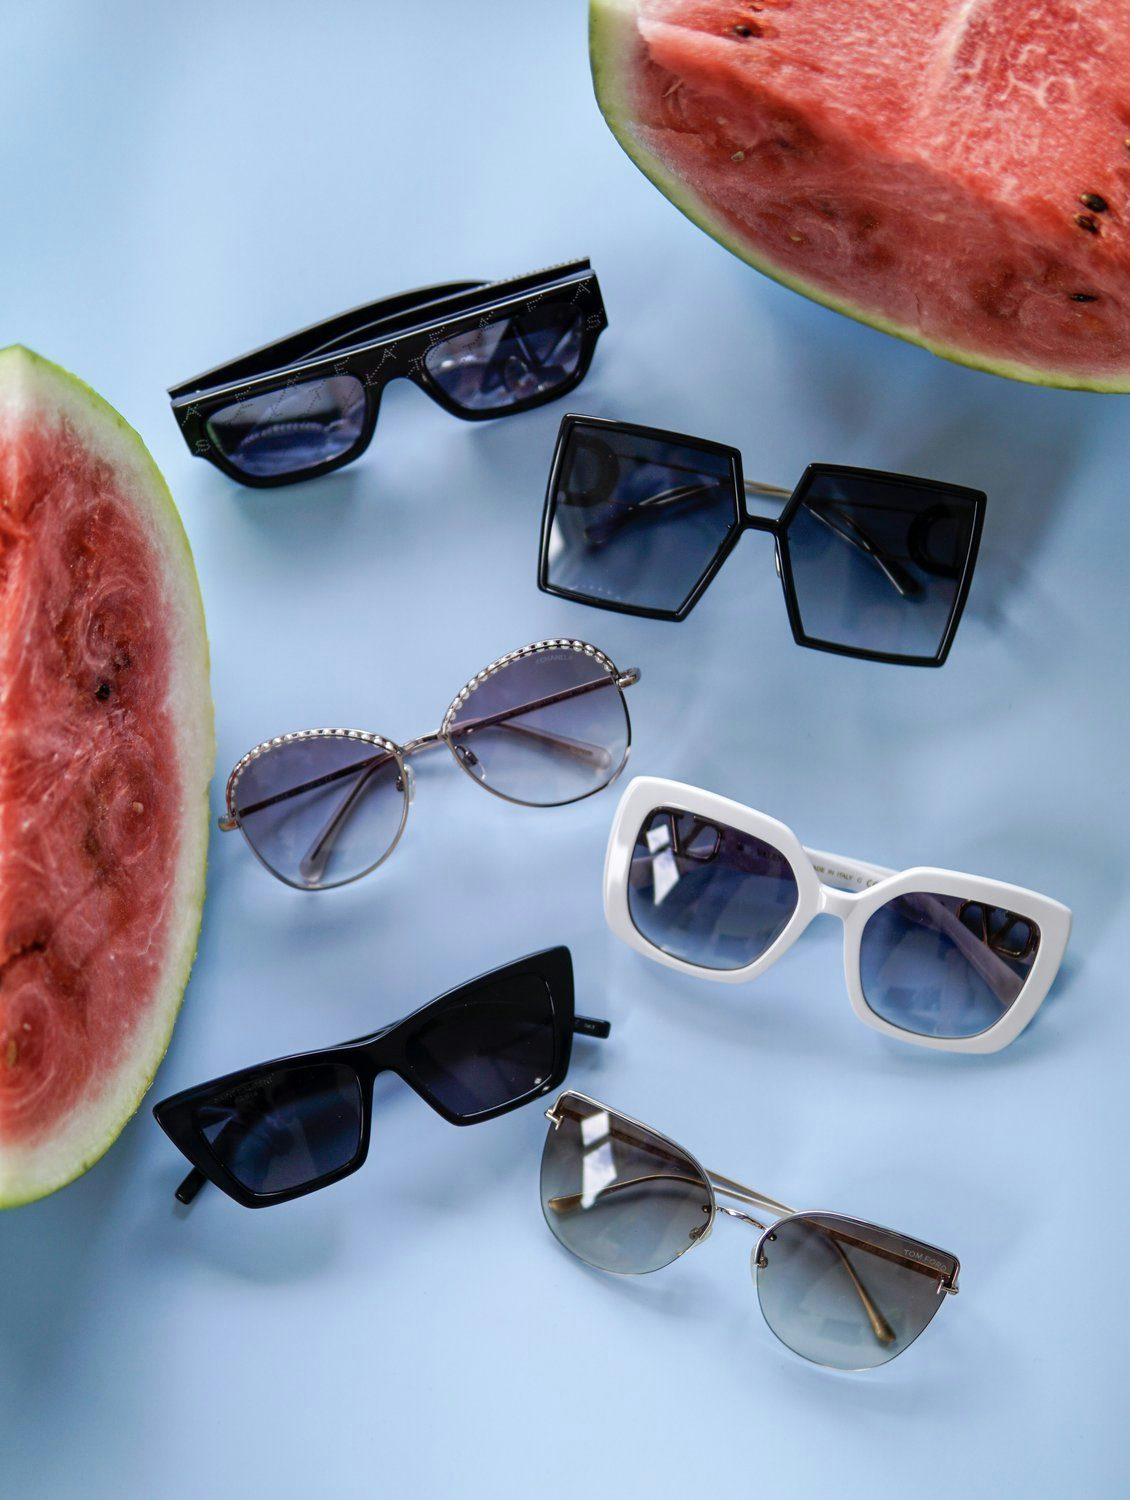 6 sunglasses between 2 slices of watermelon